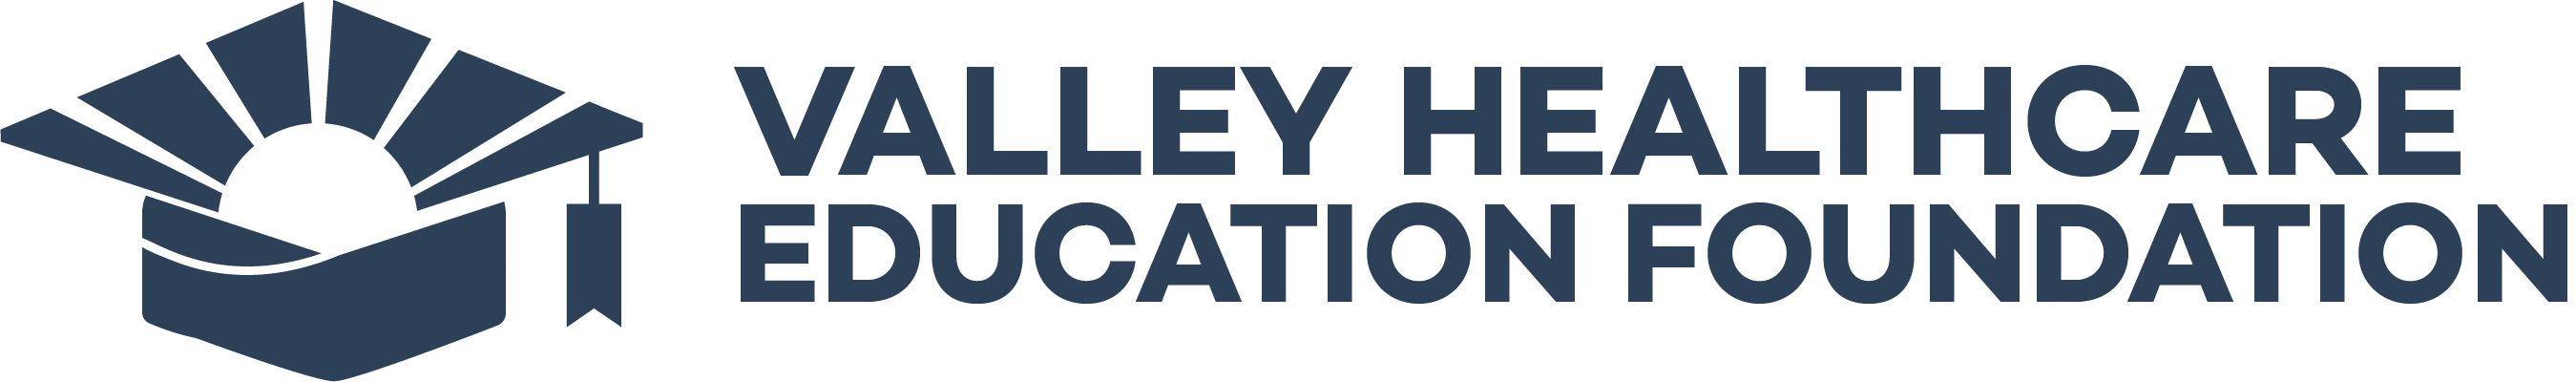 Valley Healthcare Education Foundation